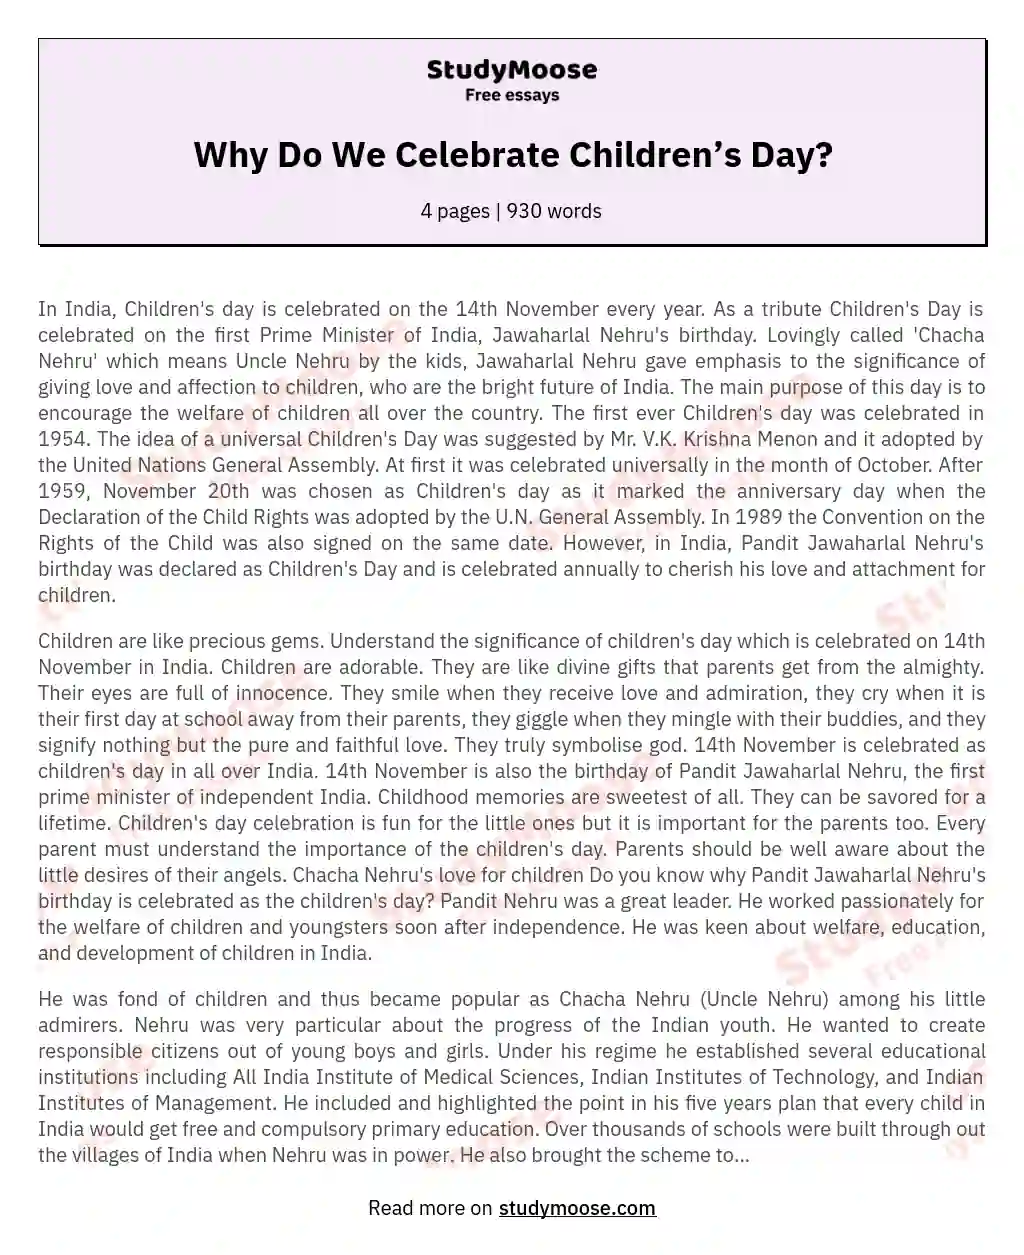 Why Do We Celebrate Children’s Day? essay